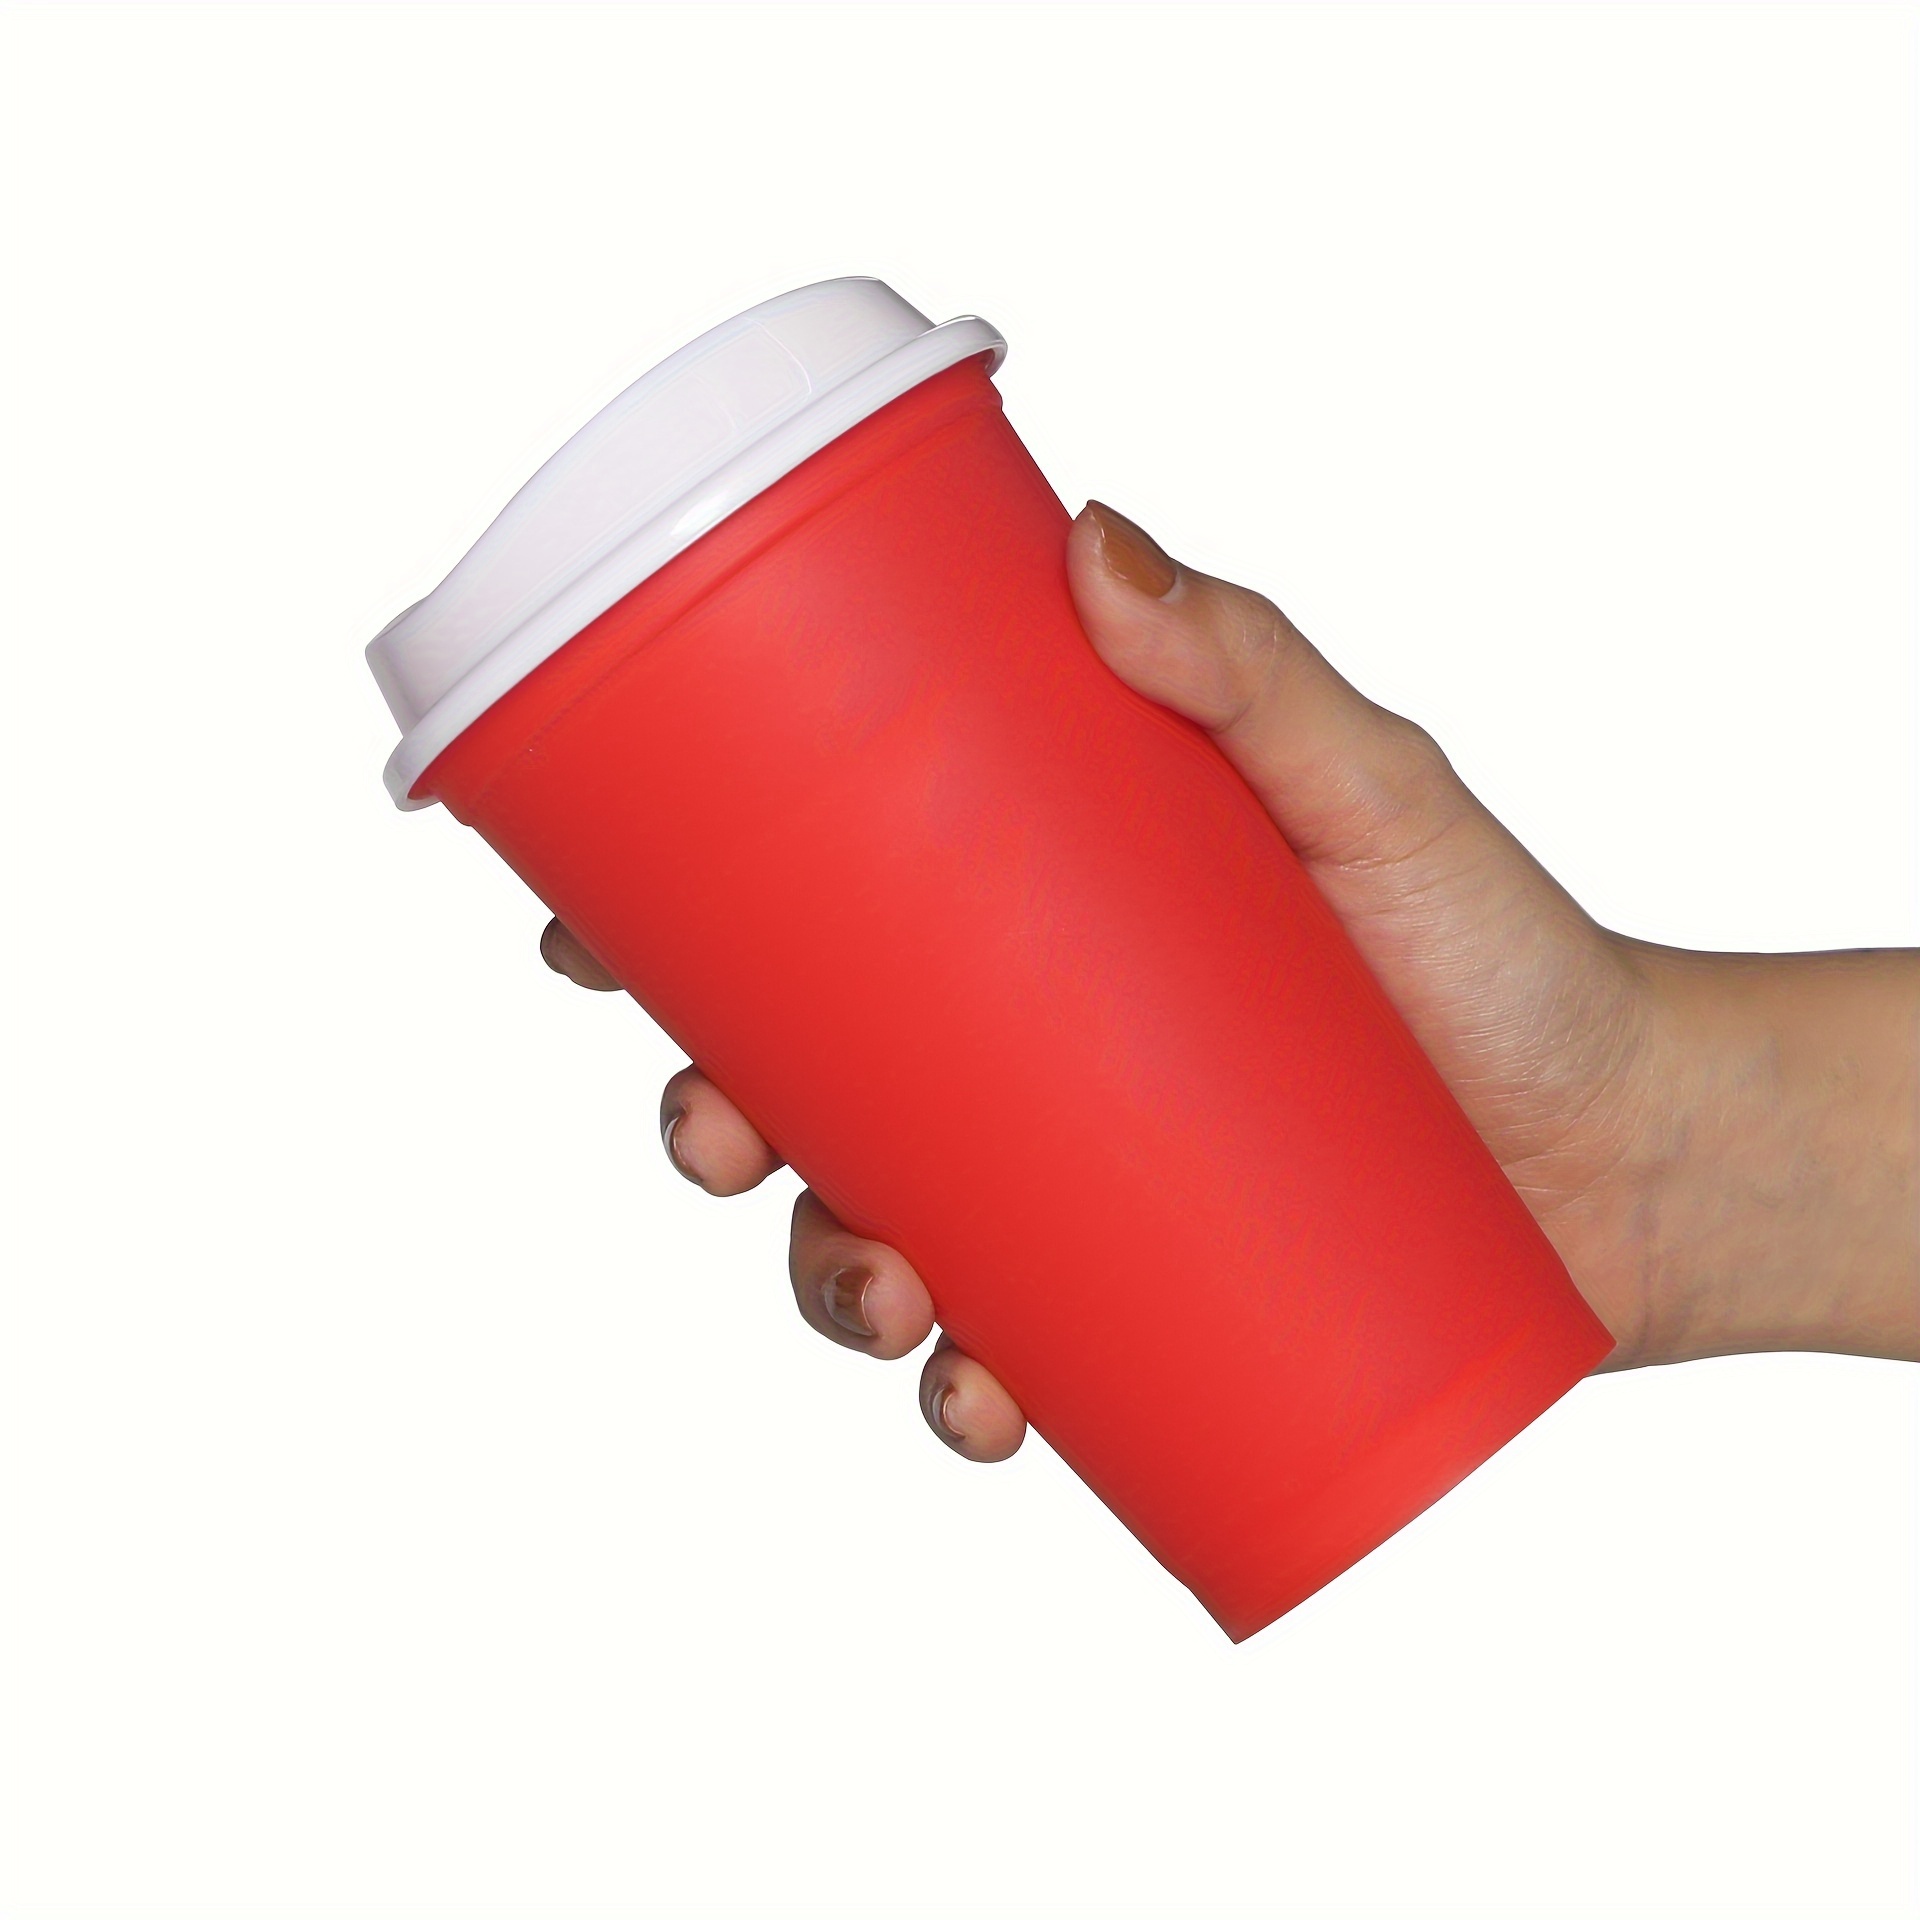 Reusable Cup ToGo